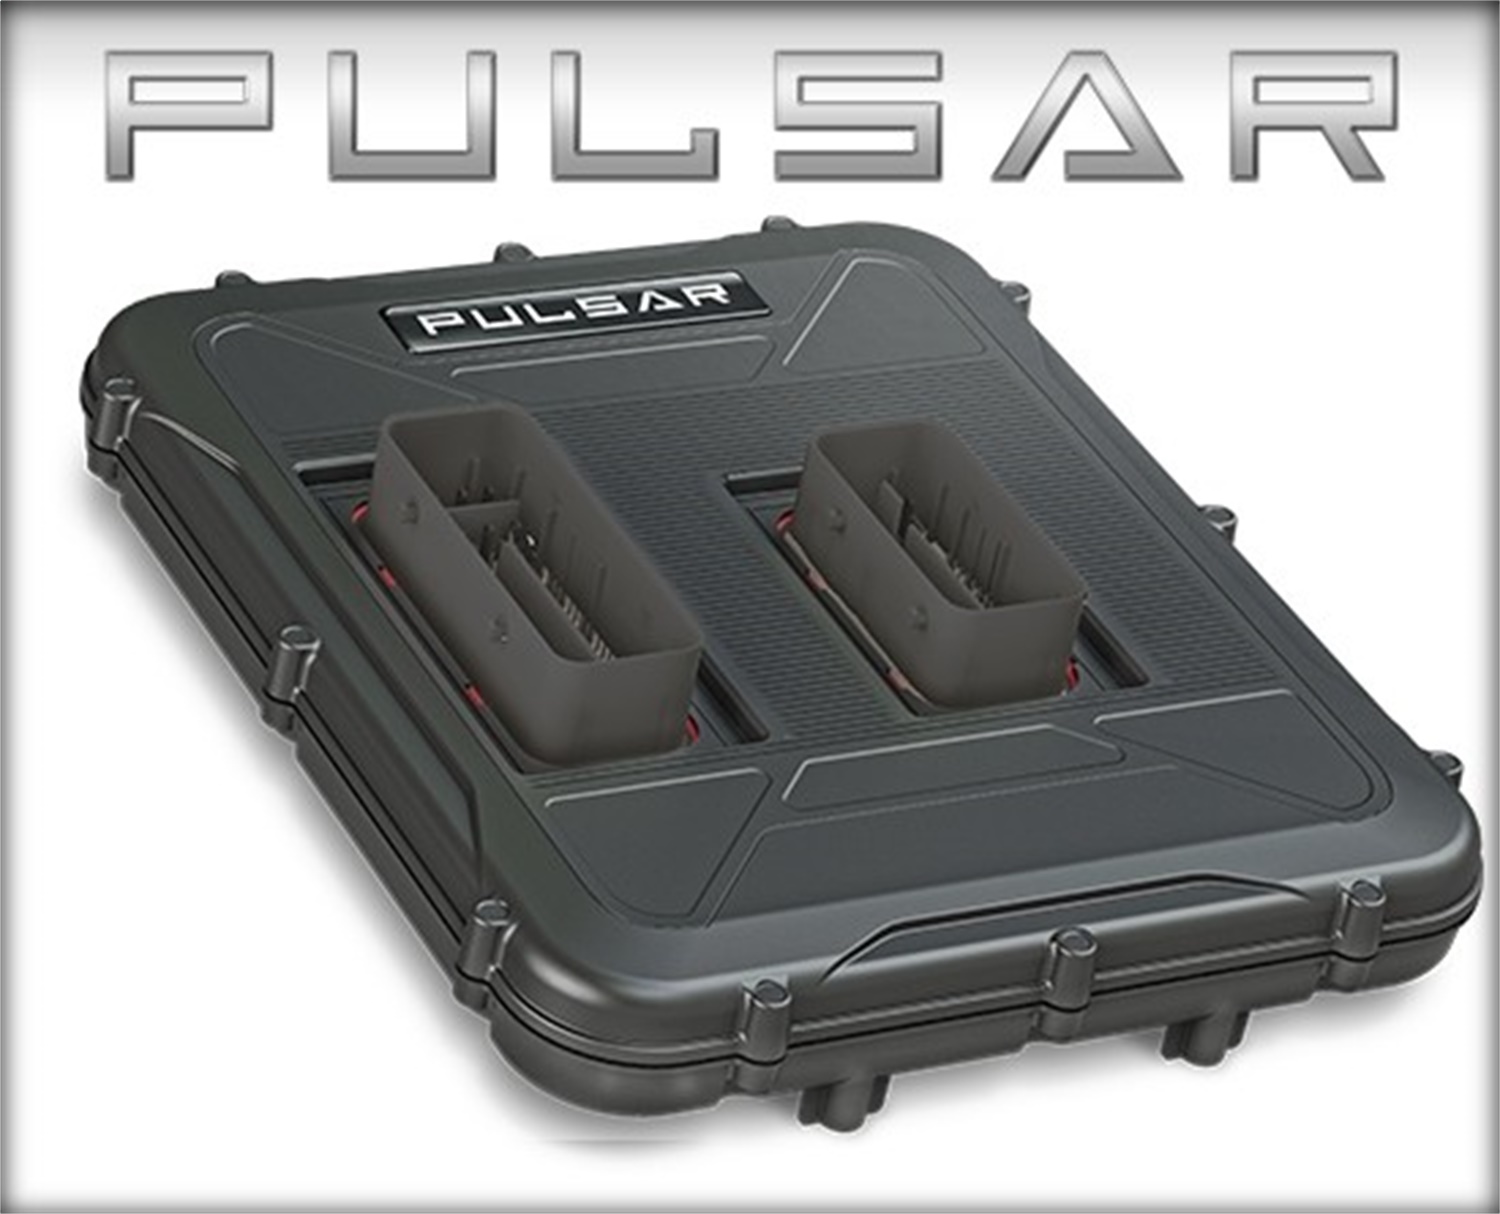 Pulsar Module; 8 Performance Levels; - 22400